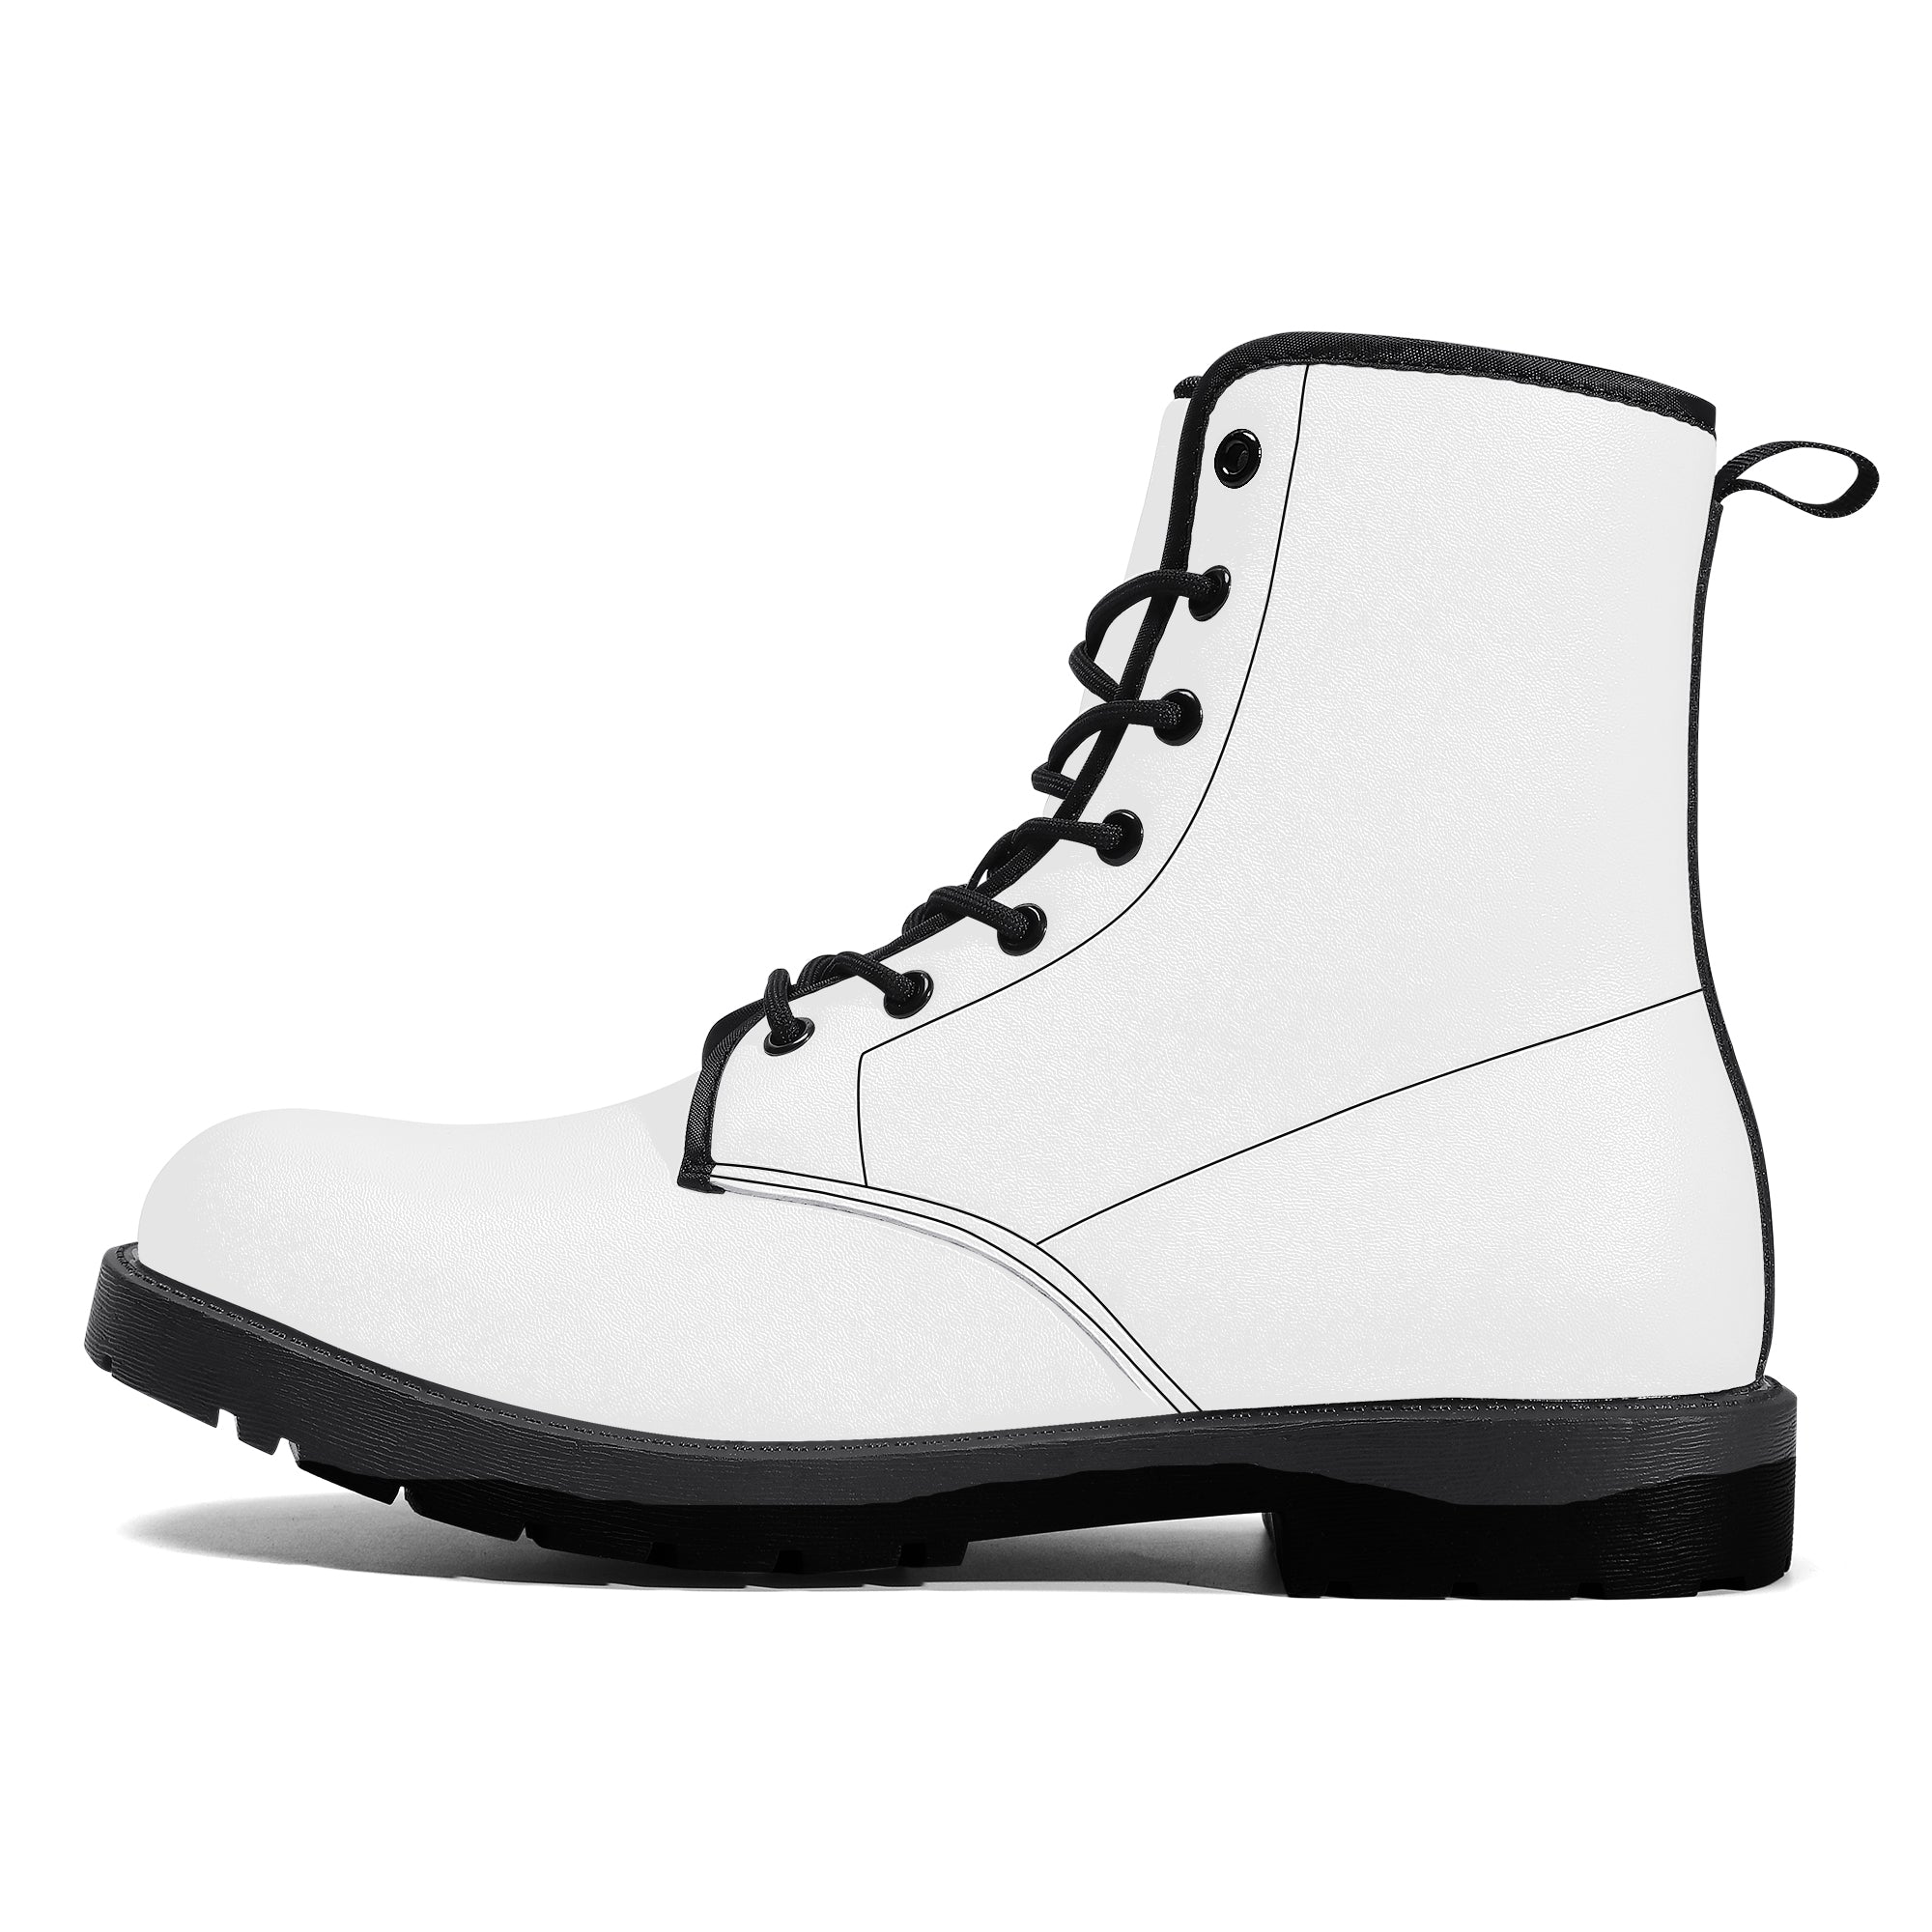 Customizable Synthetic Leather Boots - Shoe Zero